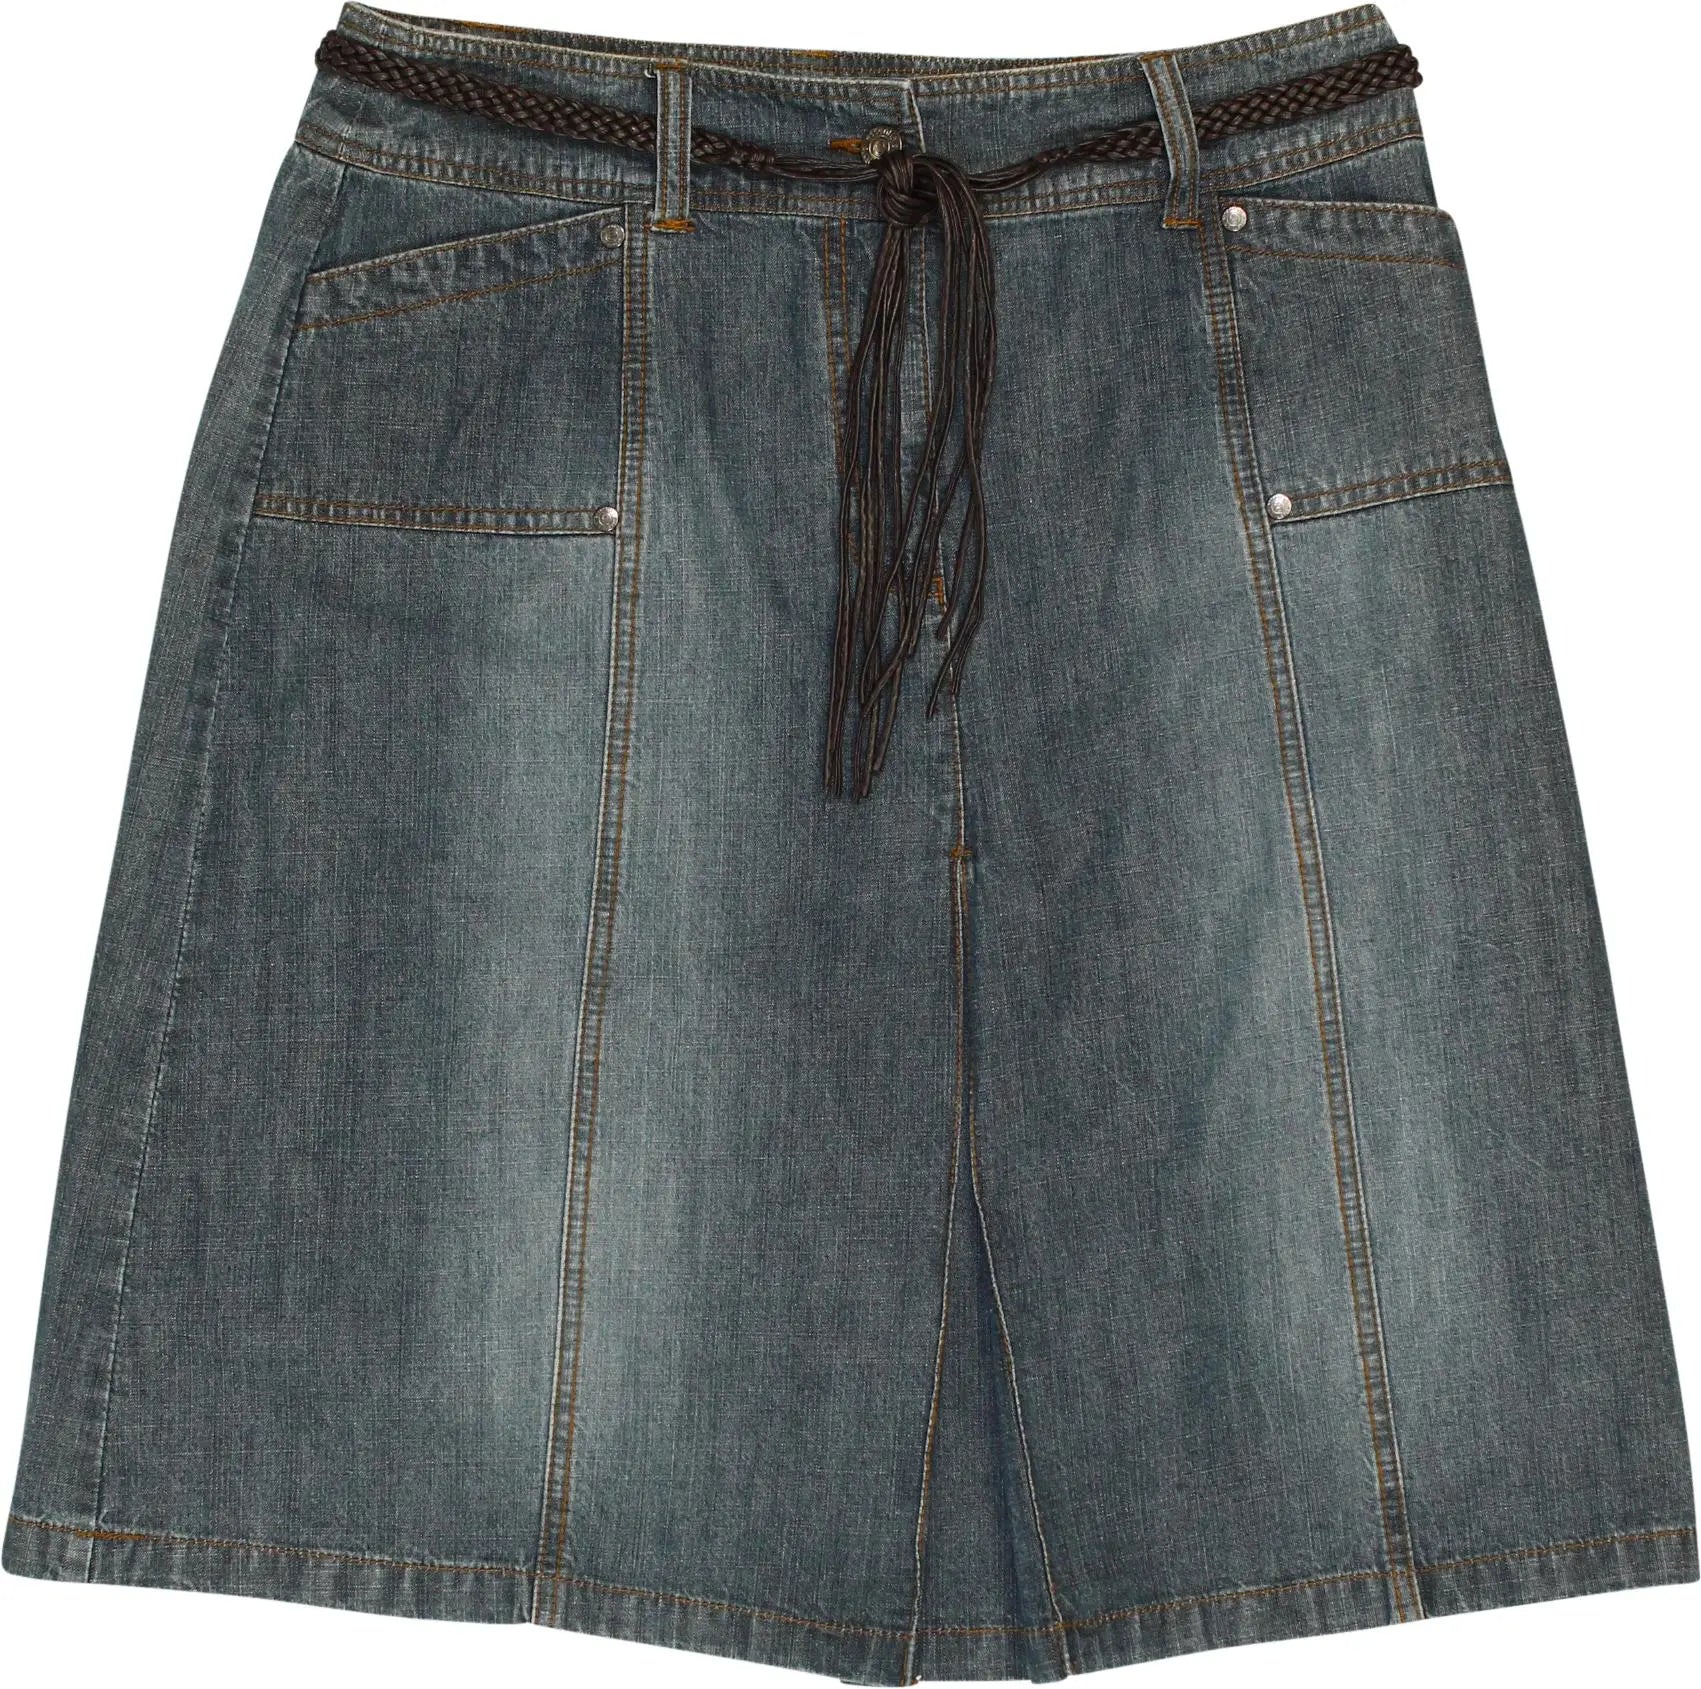 Essentials - Denim Skirt- ThriftTale.com - Vintage and second handclothing